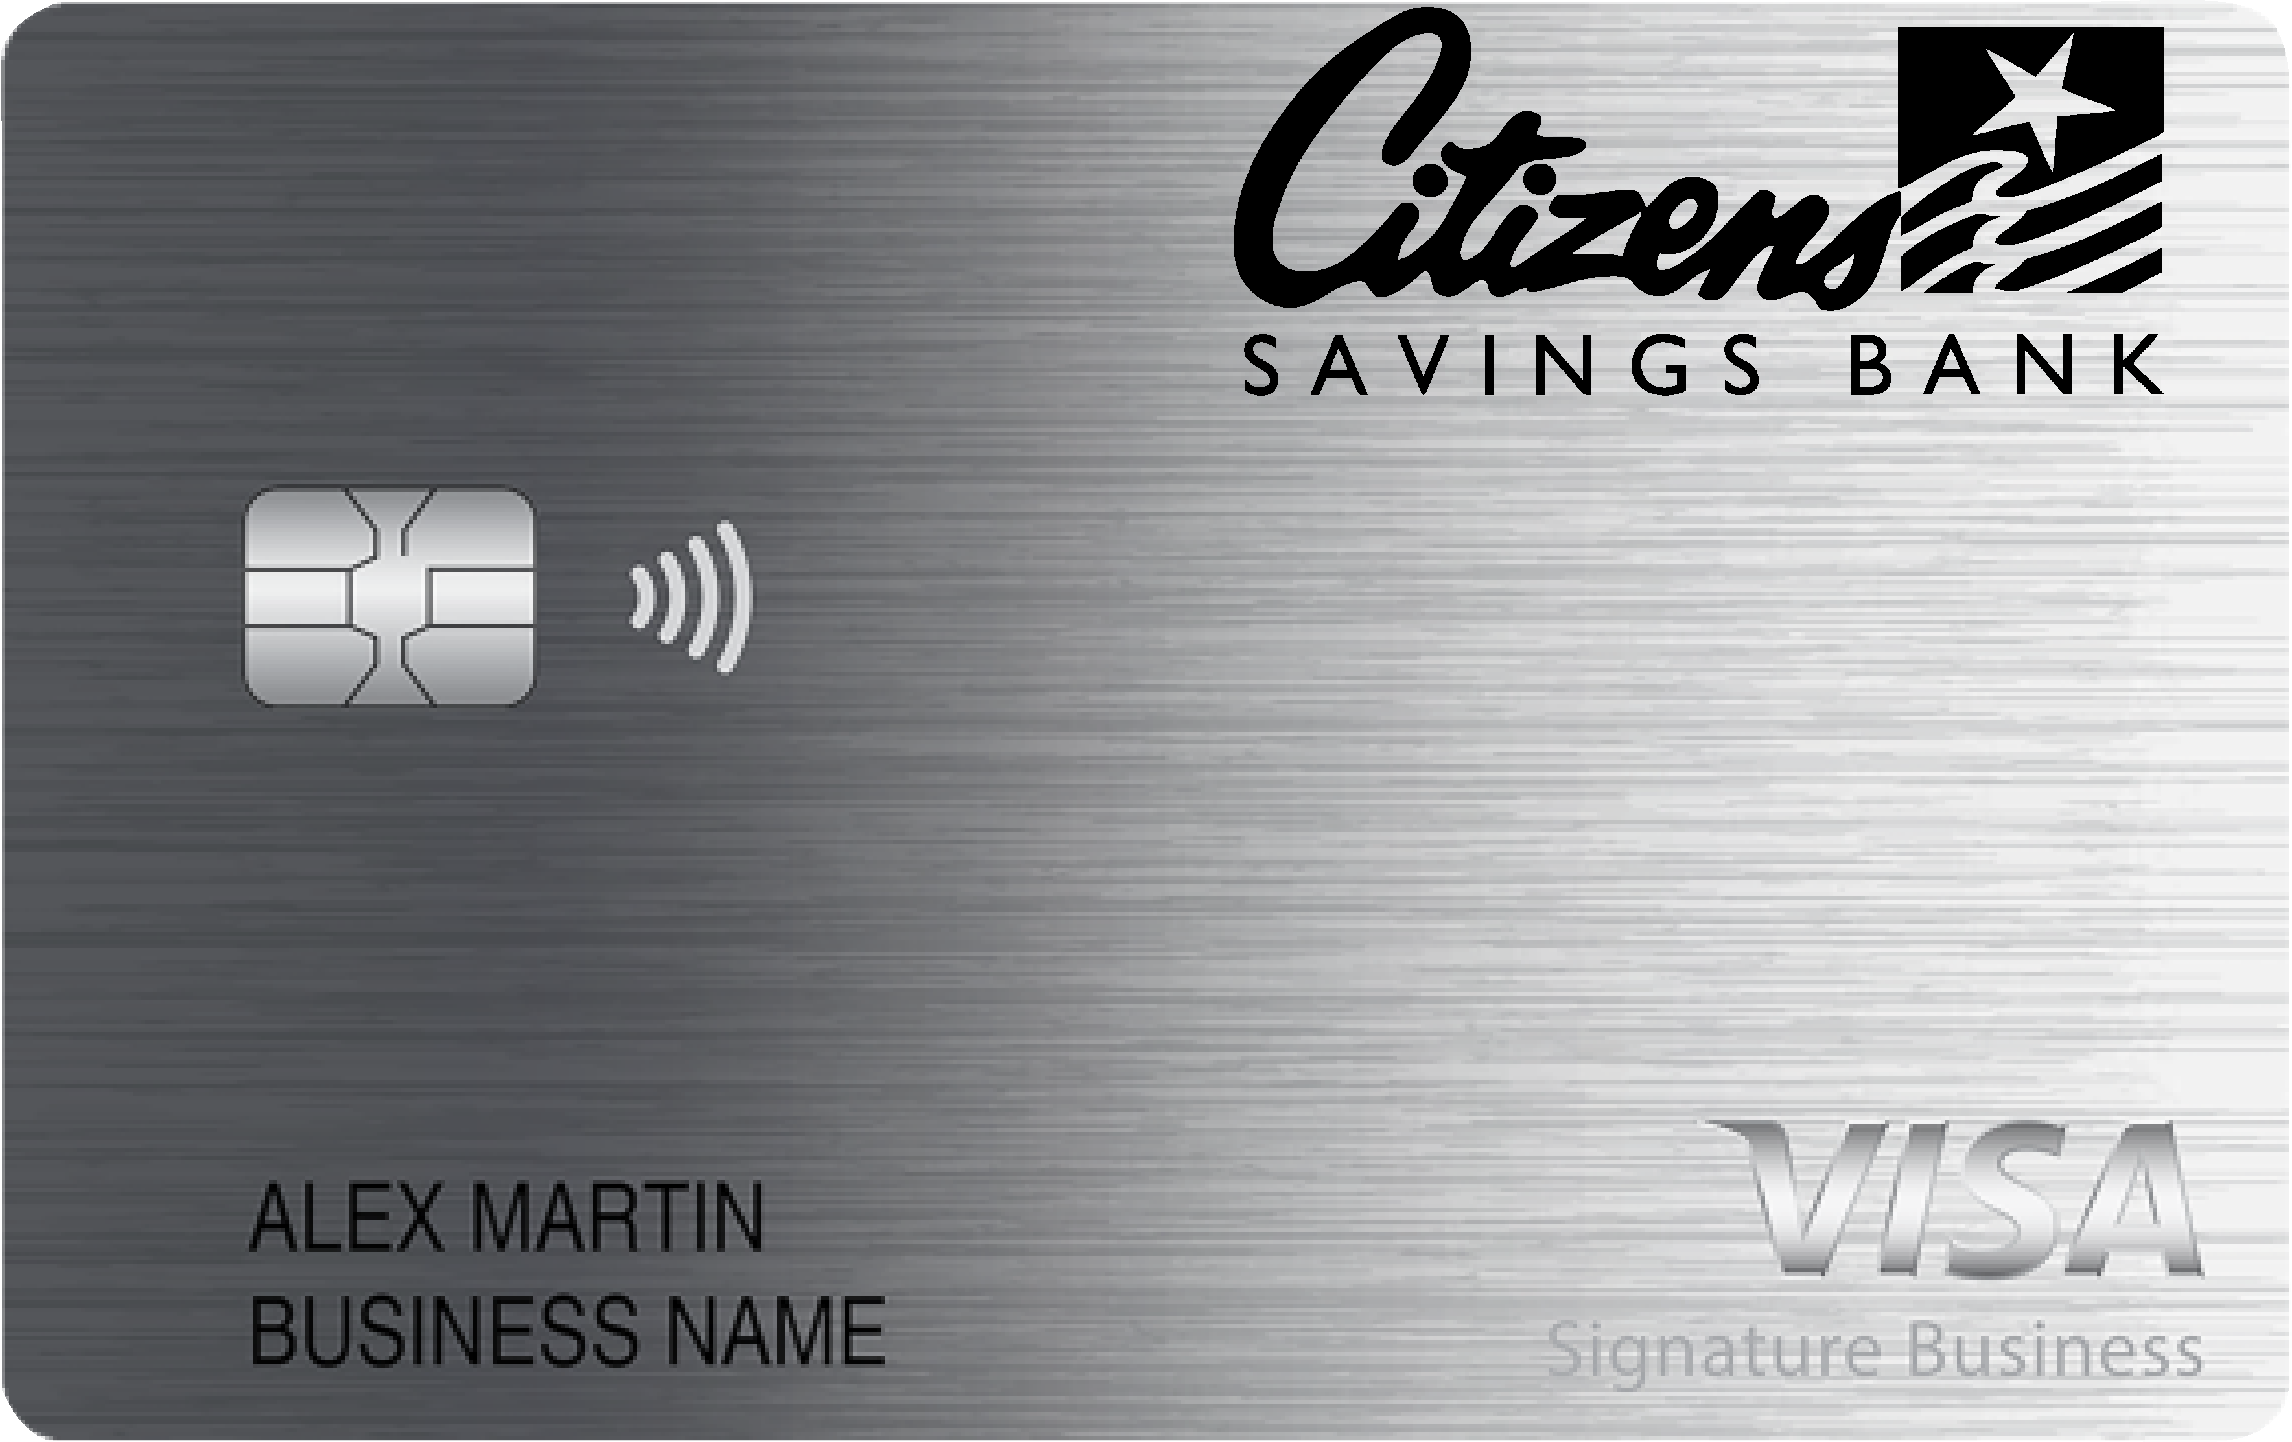 Citizens Savings Bank Smart Business Rewards Card